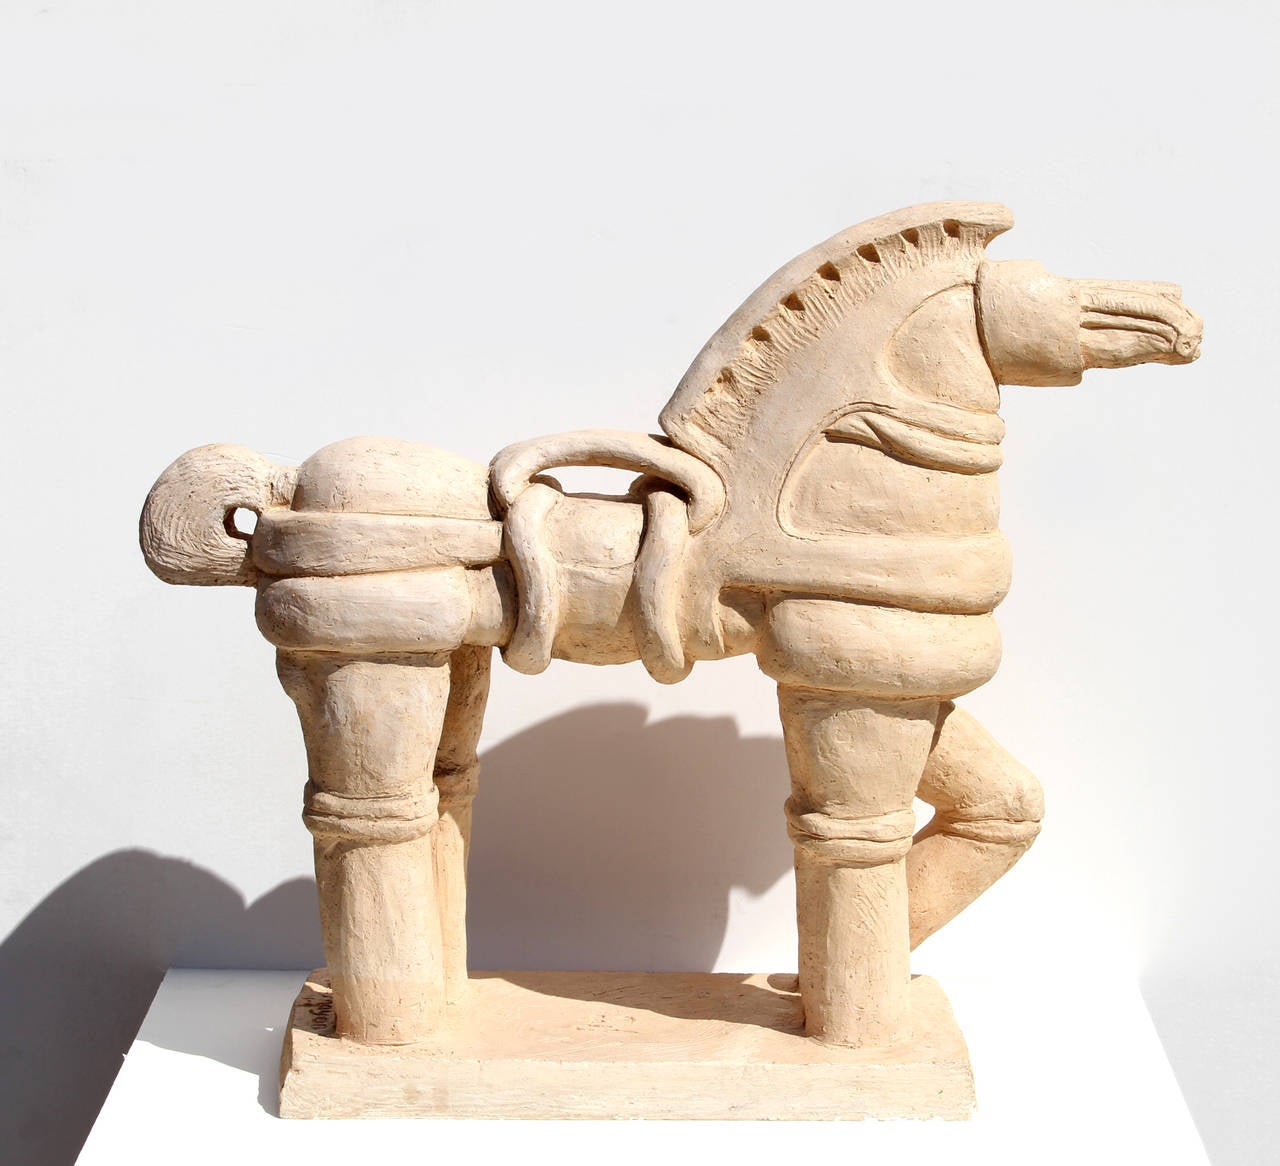 Ben A. Gonzales Figurative Sculpture - Horse - Taal Mayon, Sculpture by Ben Gonzales